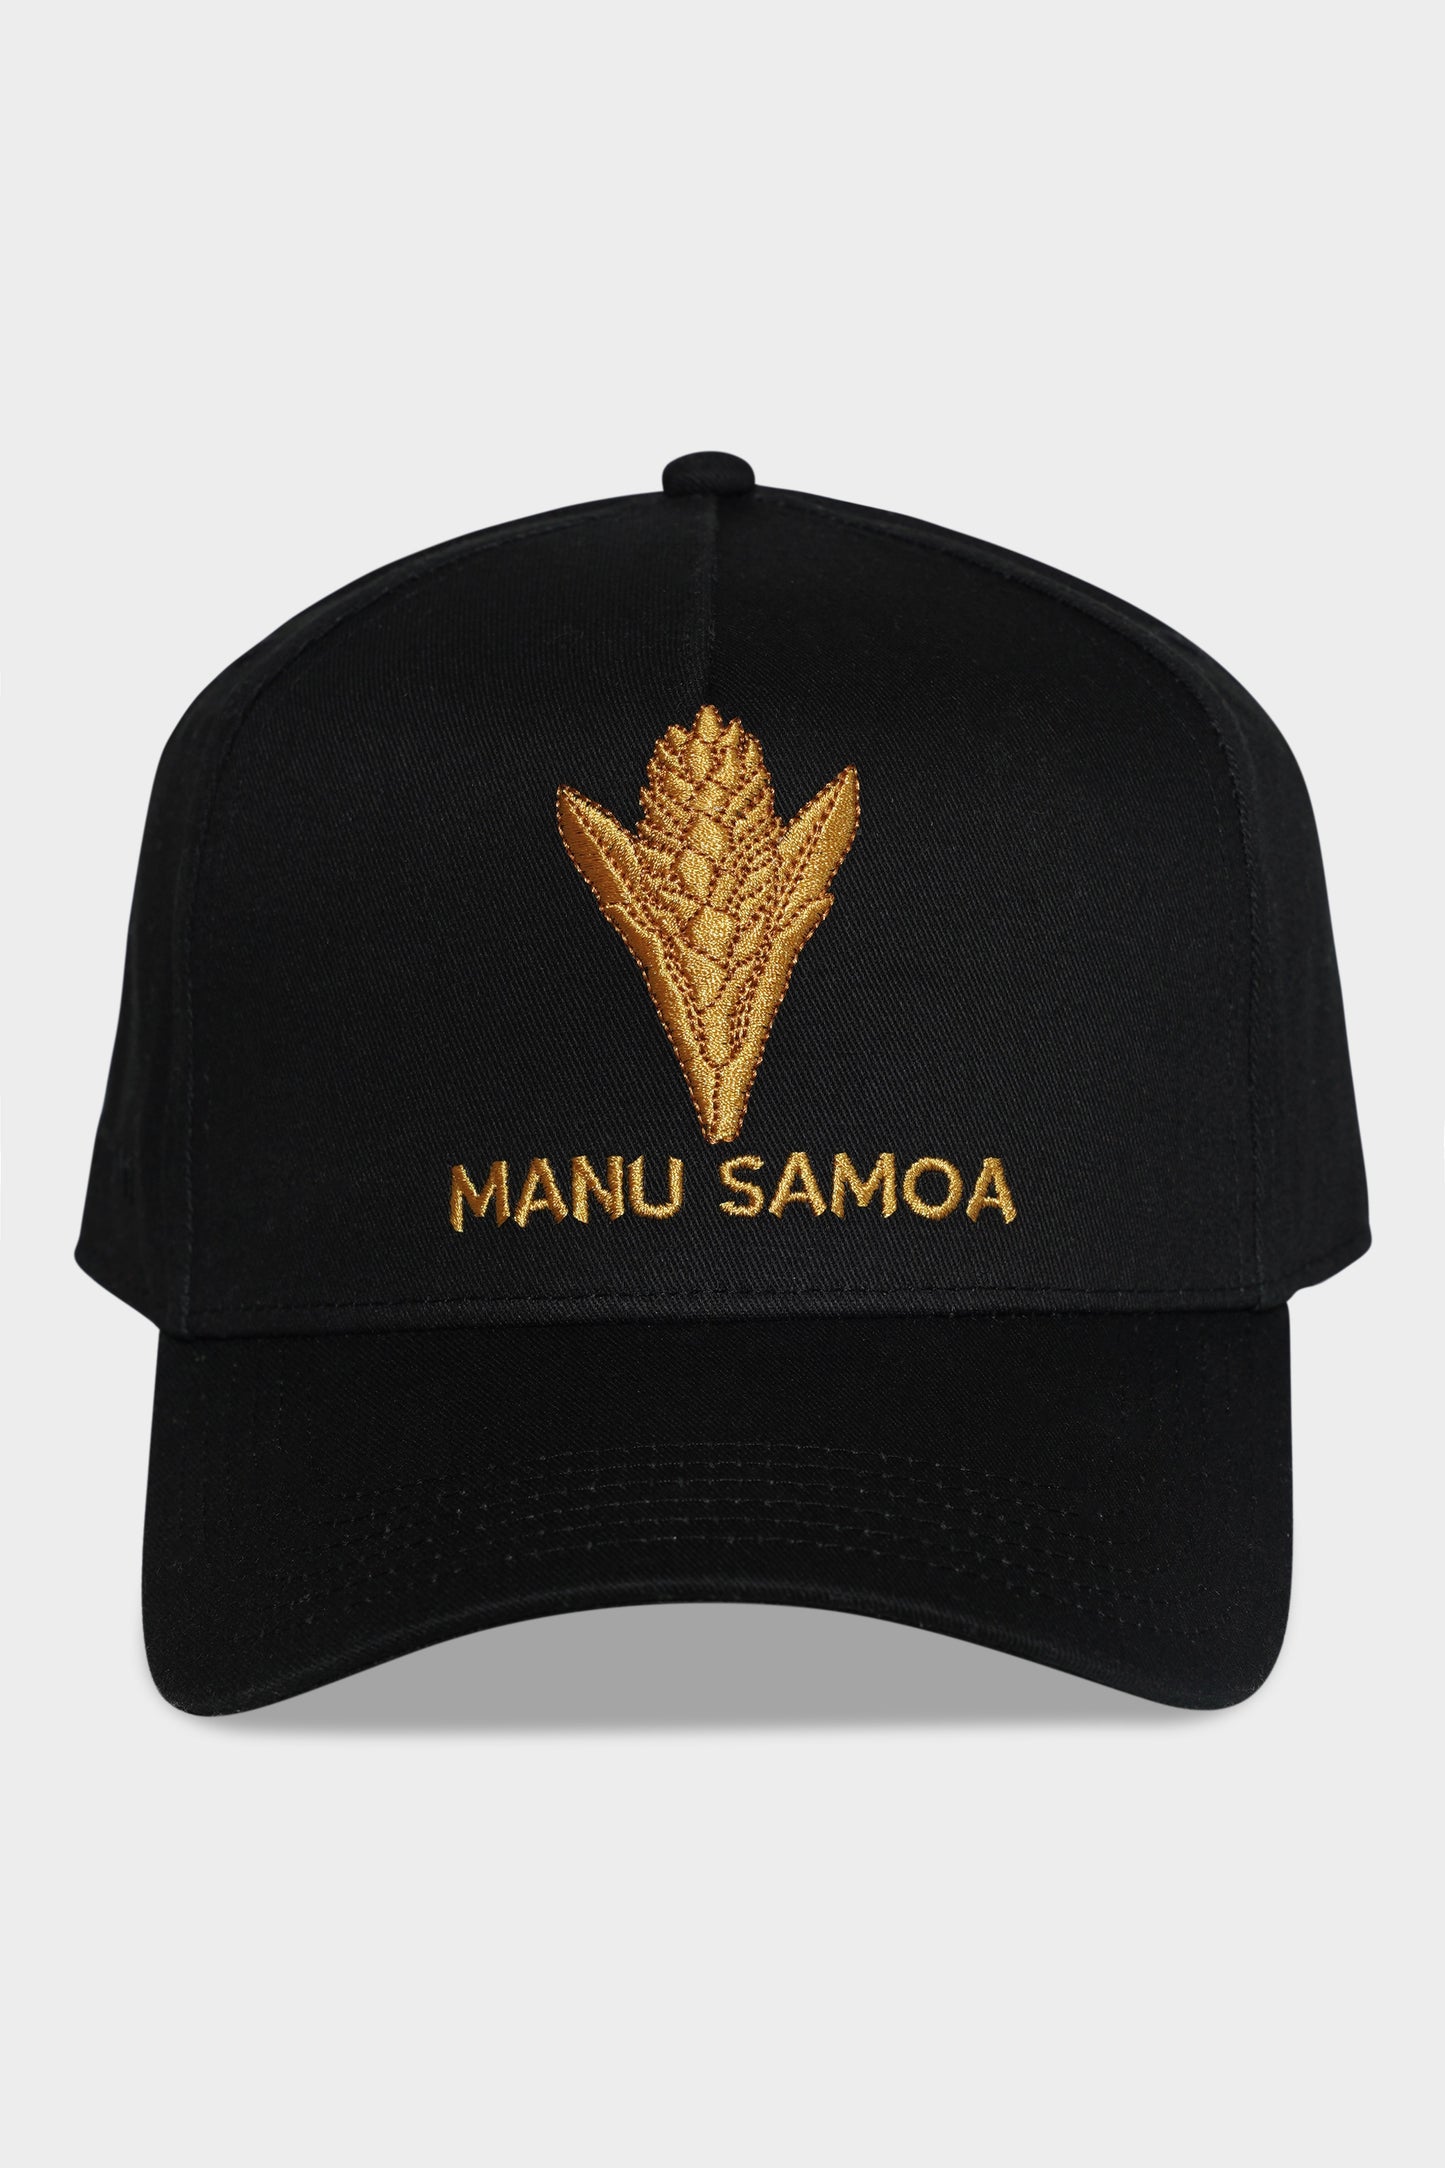 Manu Samoa Official A Frame Snapback Black/Gold